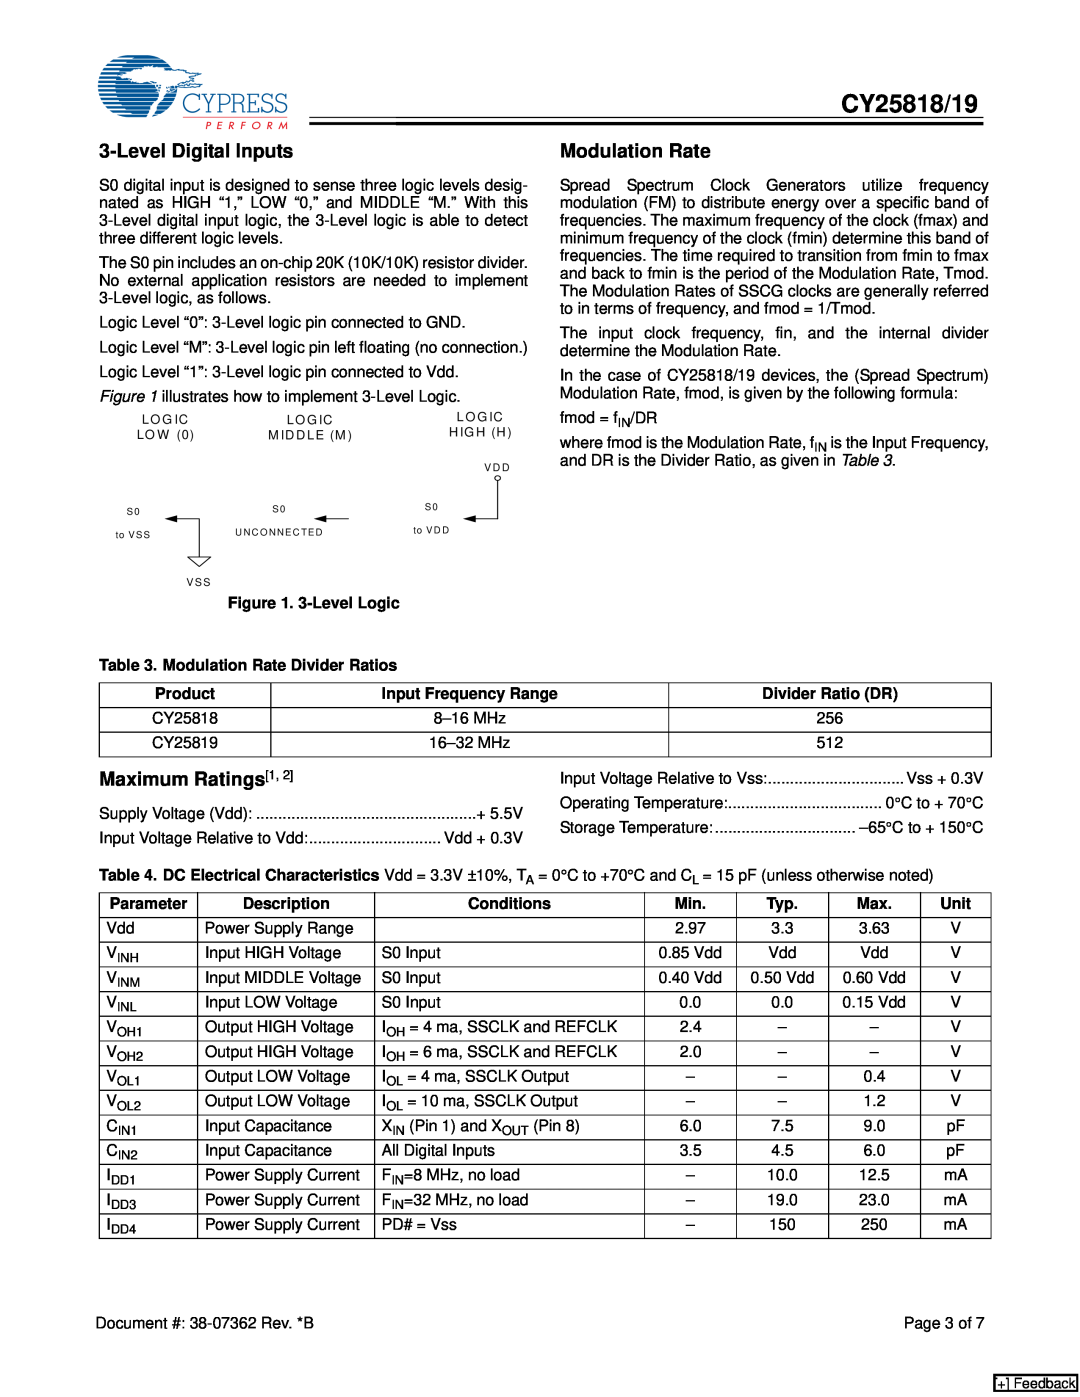 Cypress CY25819 manual Level Digital Inputs, Modulation Rate, Maximum Ratings 1, CY25818/19 